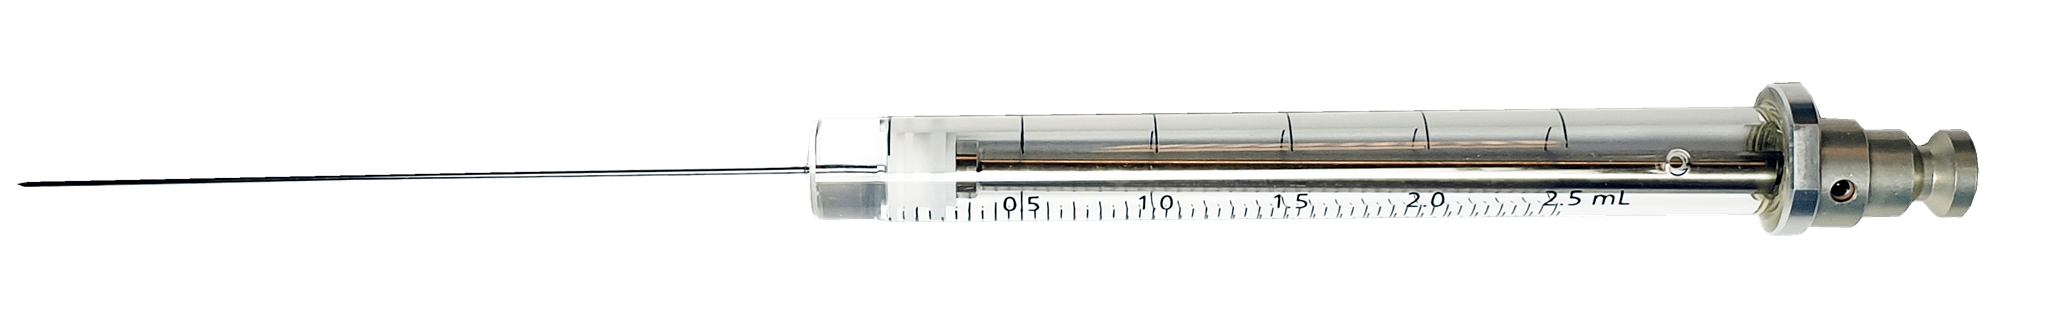 Afbeelding van HS Syringe; 2.5 ml; gas tight; fixed needle;23G;65mm needle length;side hole dome